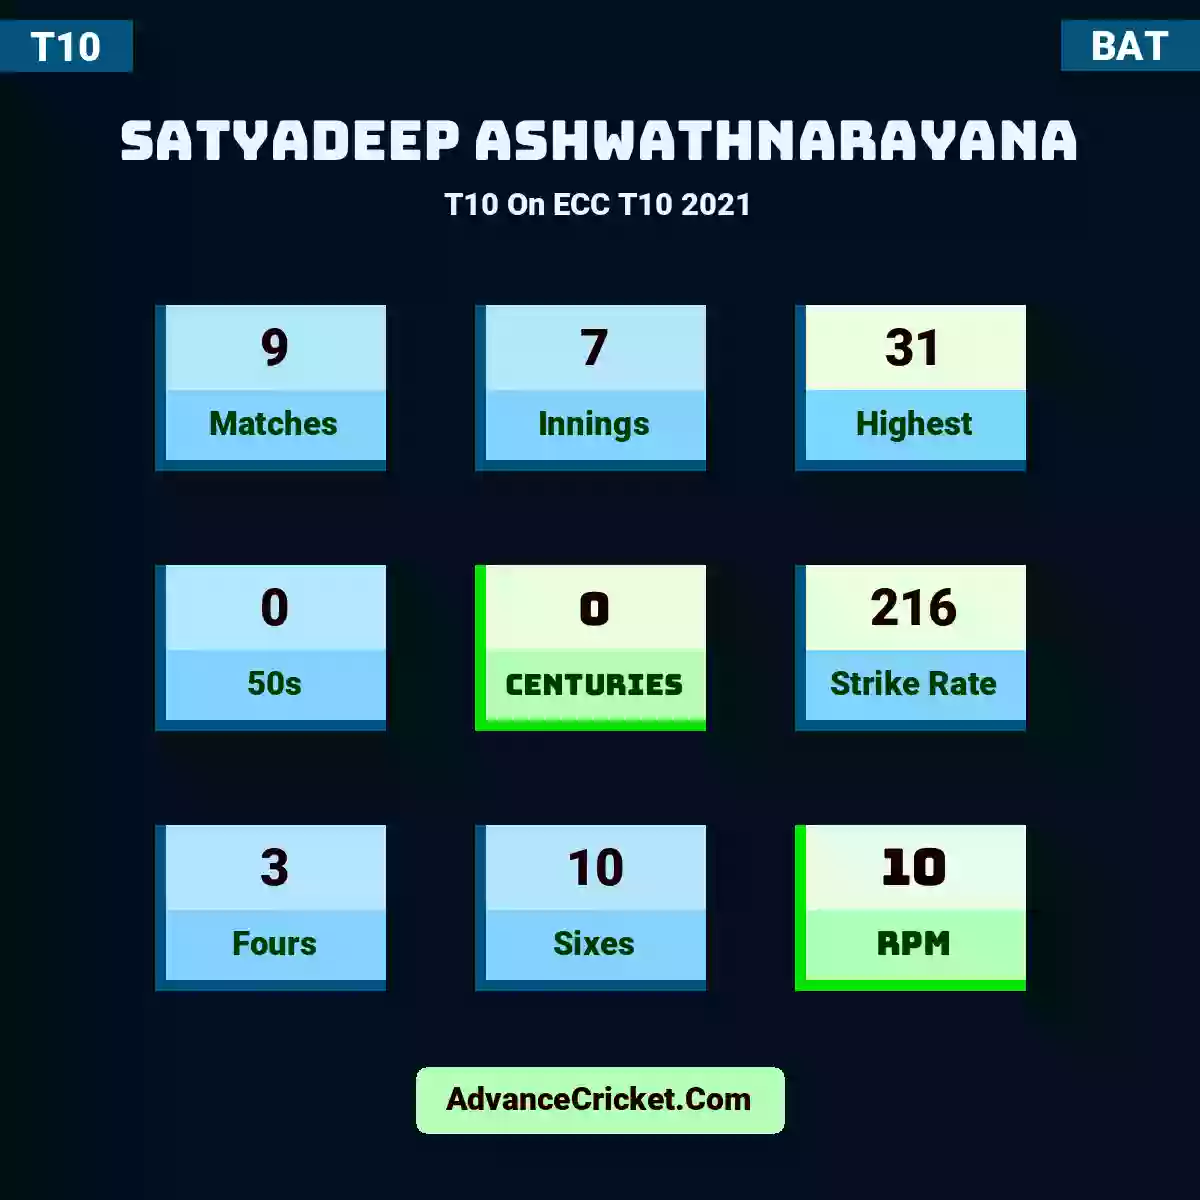 Satyadeep Ashwathnarayana T10  On ECC T10 2021, Satyadeep Ashwathnarayana played 9 matches, scored 31 runs as highest, 0 half-centuries, and 0 centuries, with a strike rate of 216. S.Ashwathnarayana hit 3 fours and 10 sixes, with an RPM of 10.